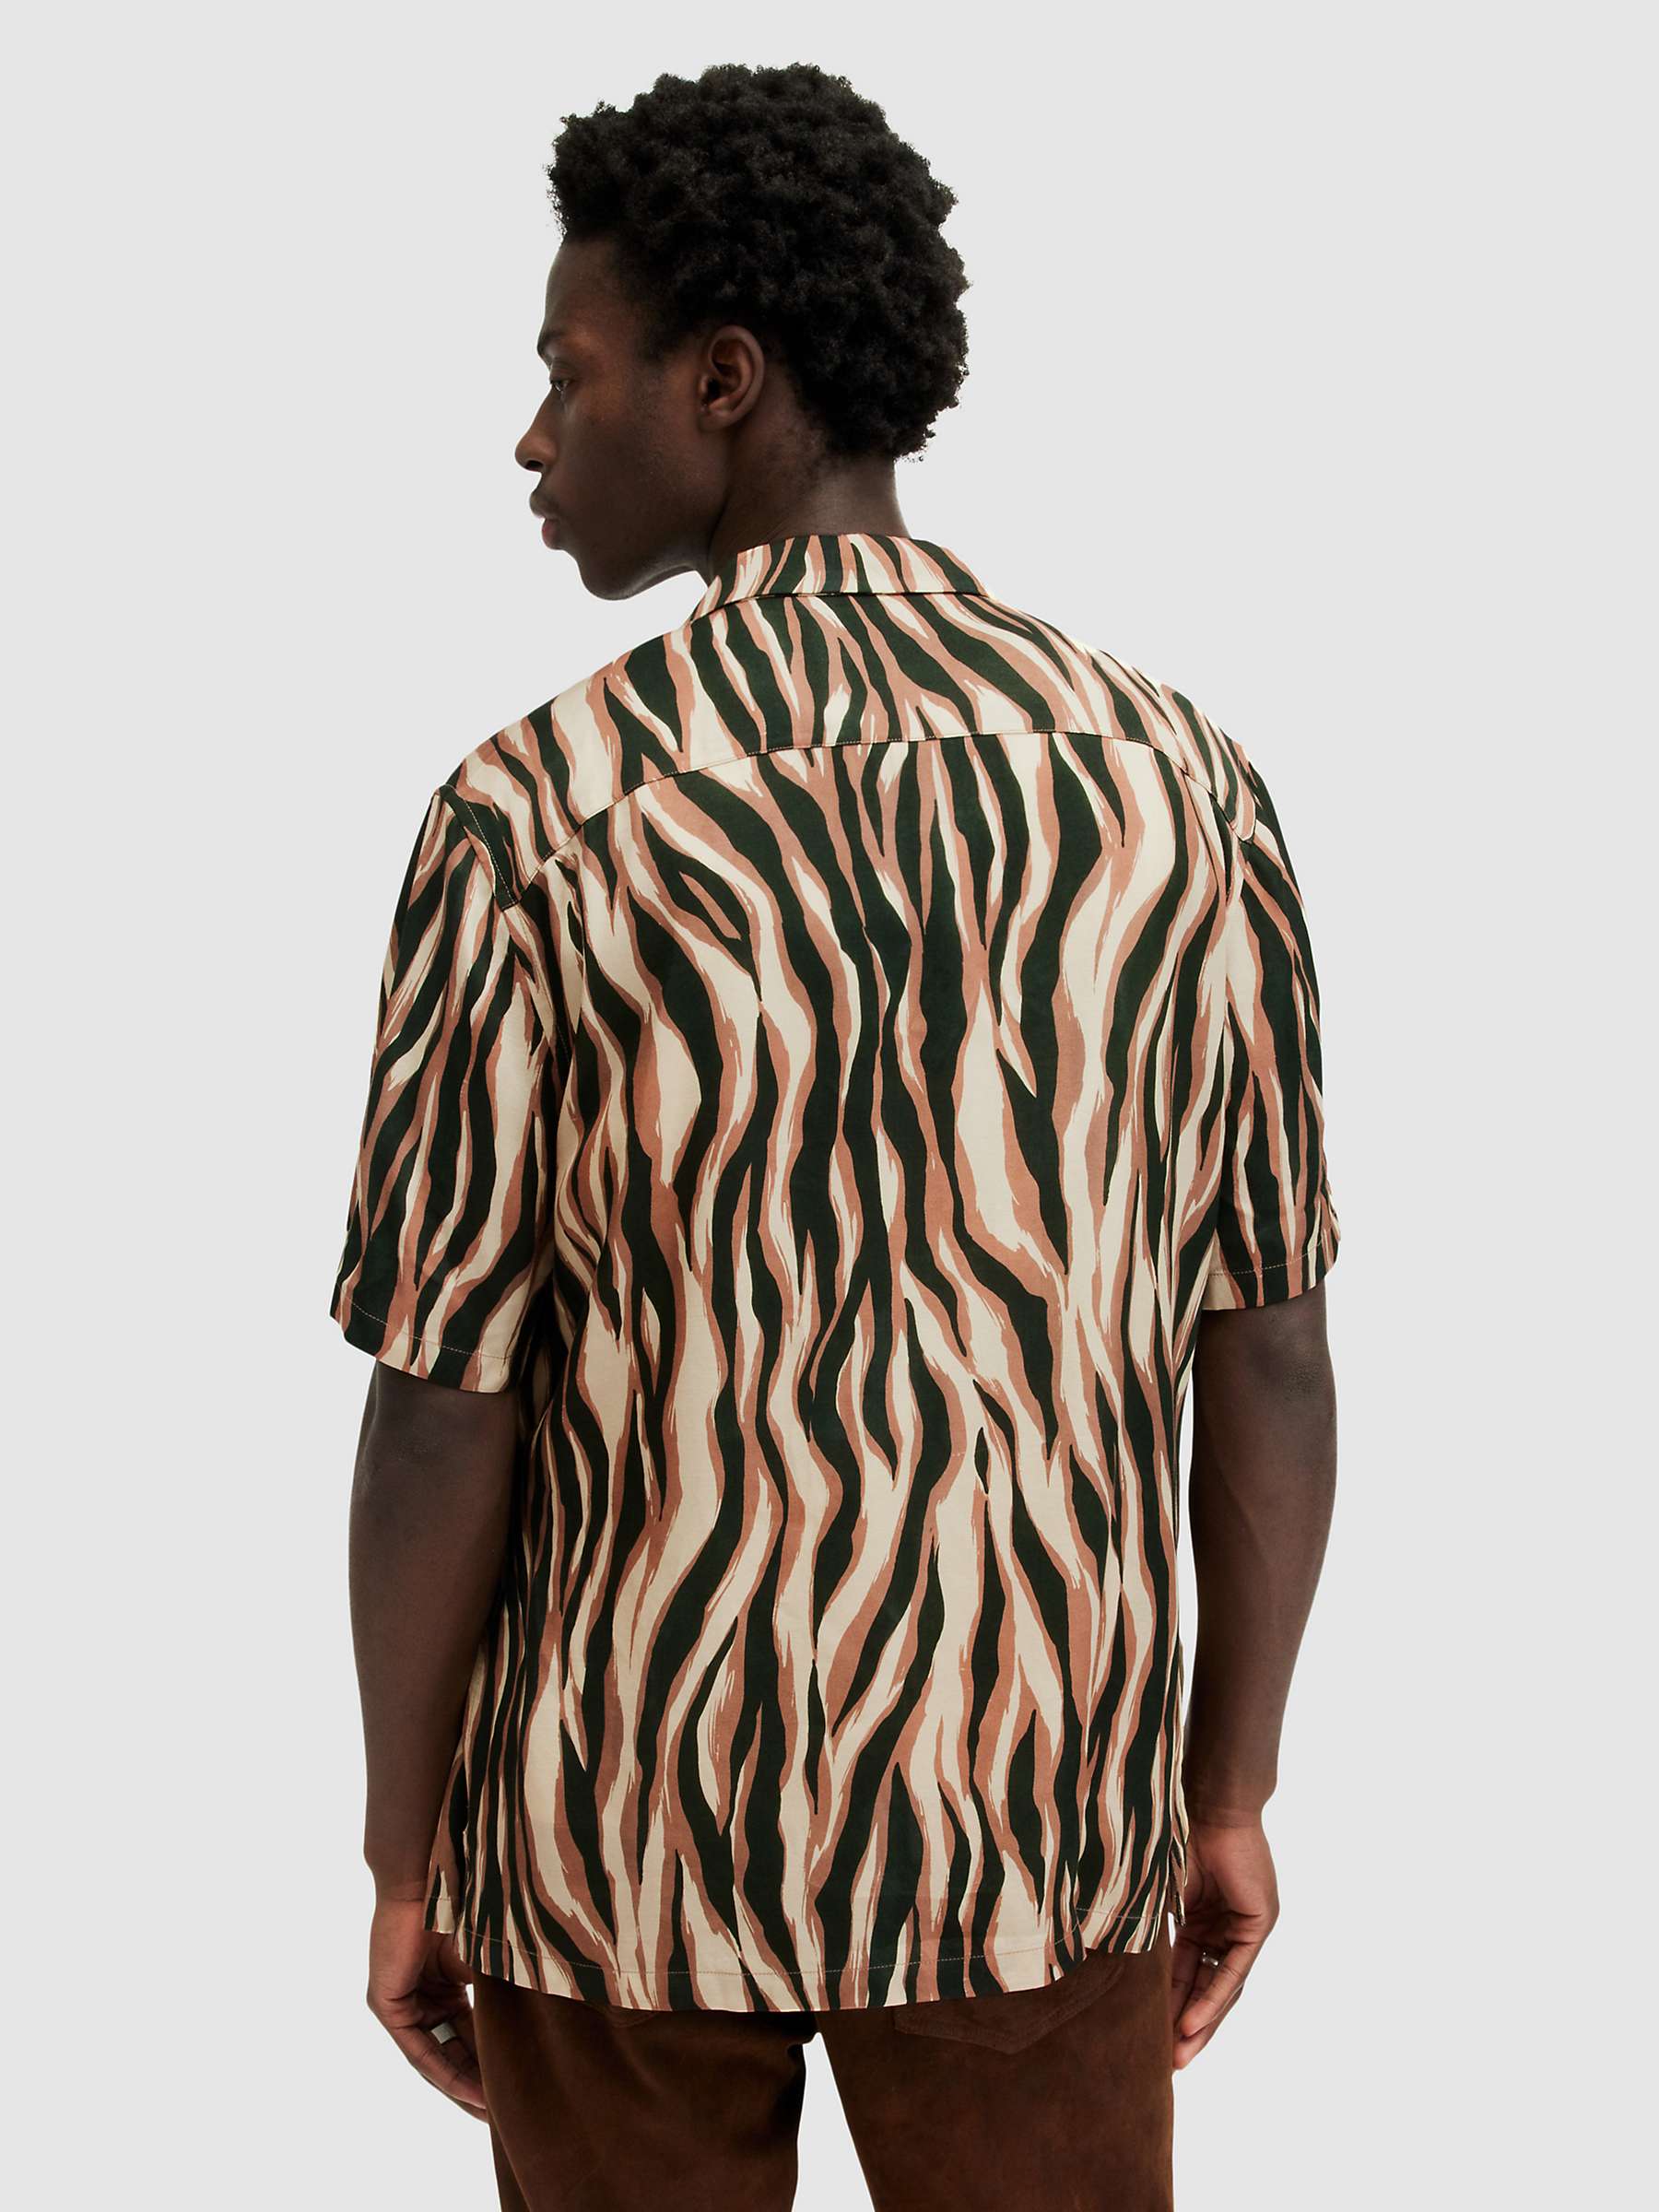 Buy AllSaints Fired Short Sleeve Shirt, Brown/Multi Online at johnlewis.com